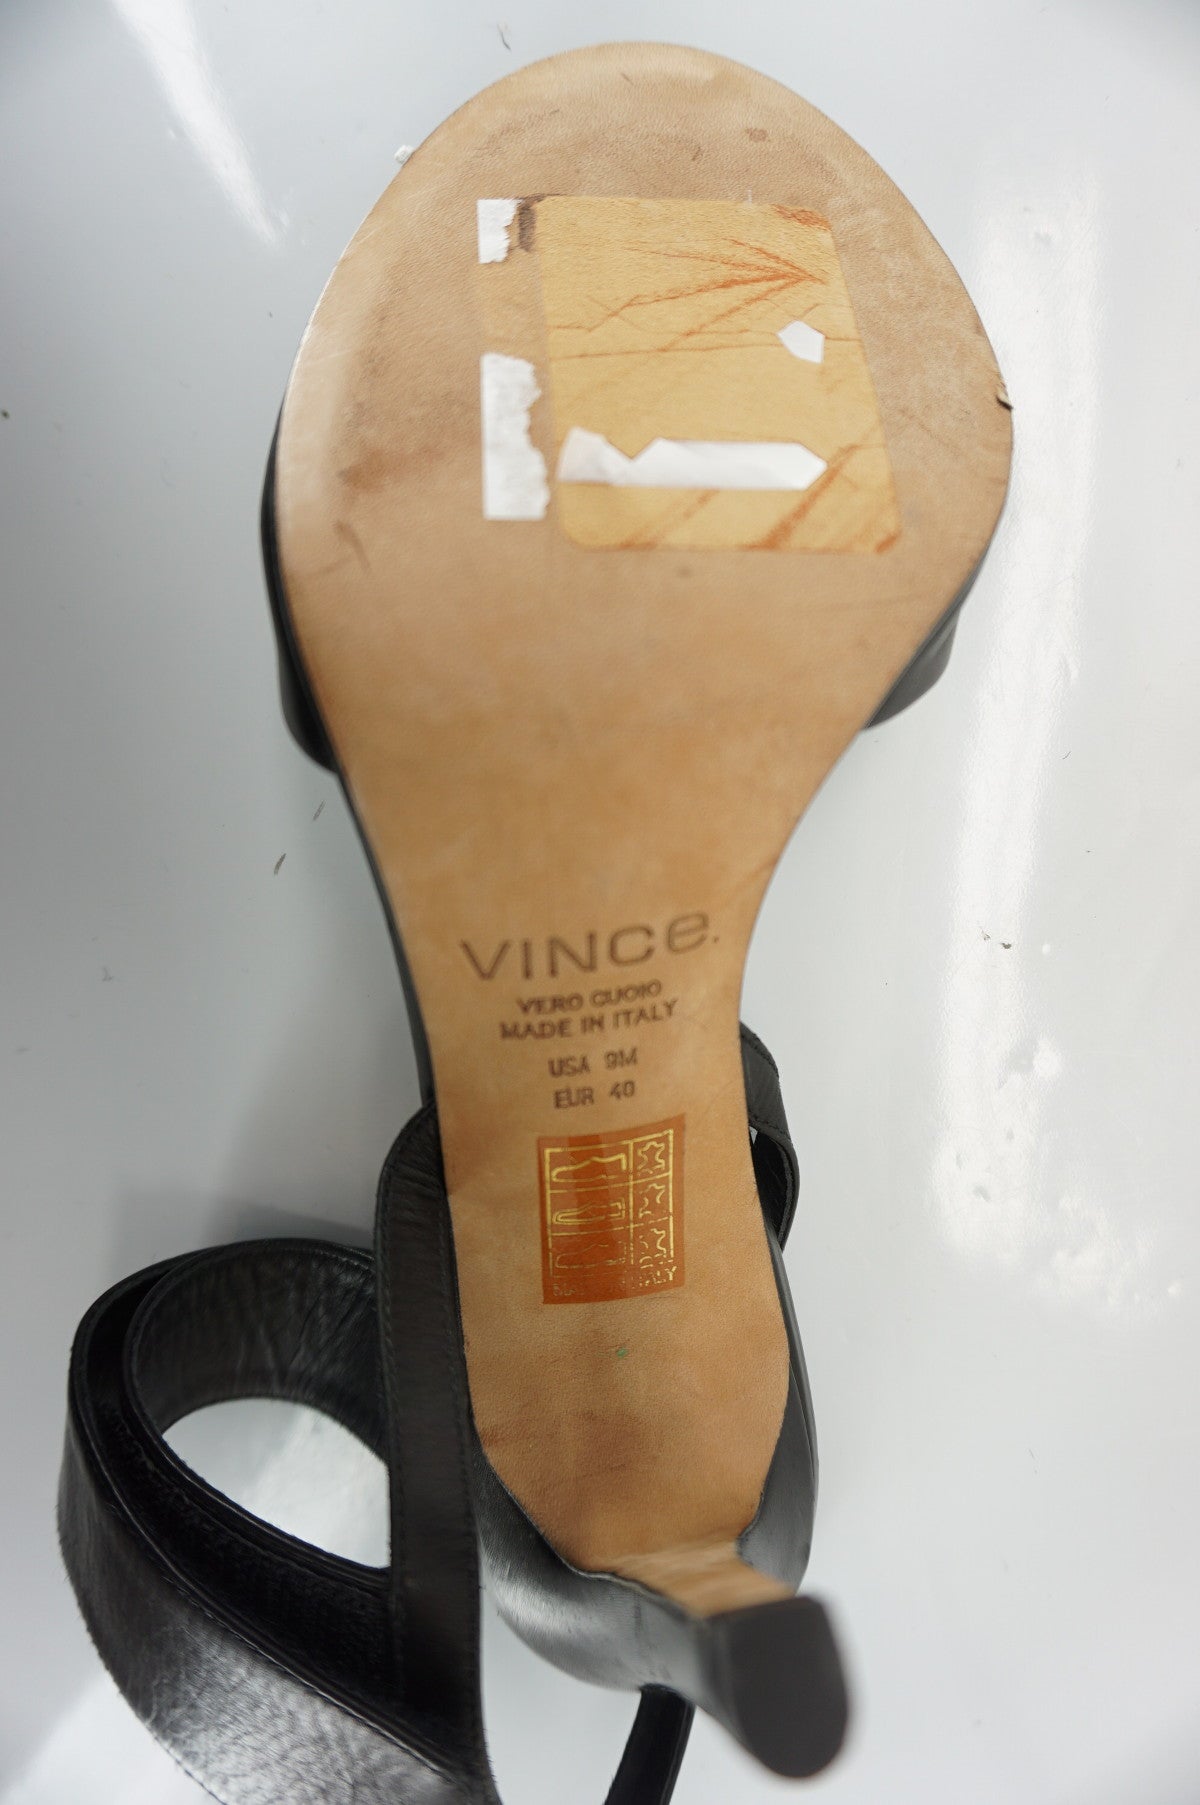 Vince Black Leather Genna Ankle Strap Heels Sandals Size 9 NIB Women's Peep Toe